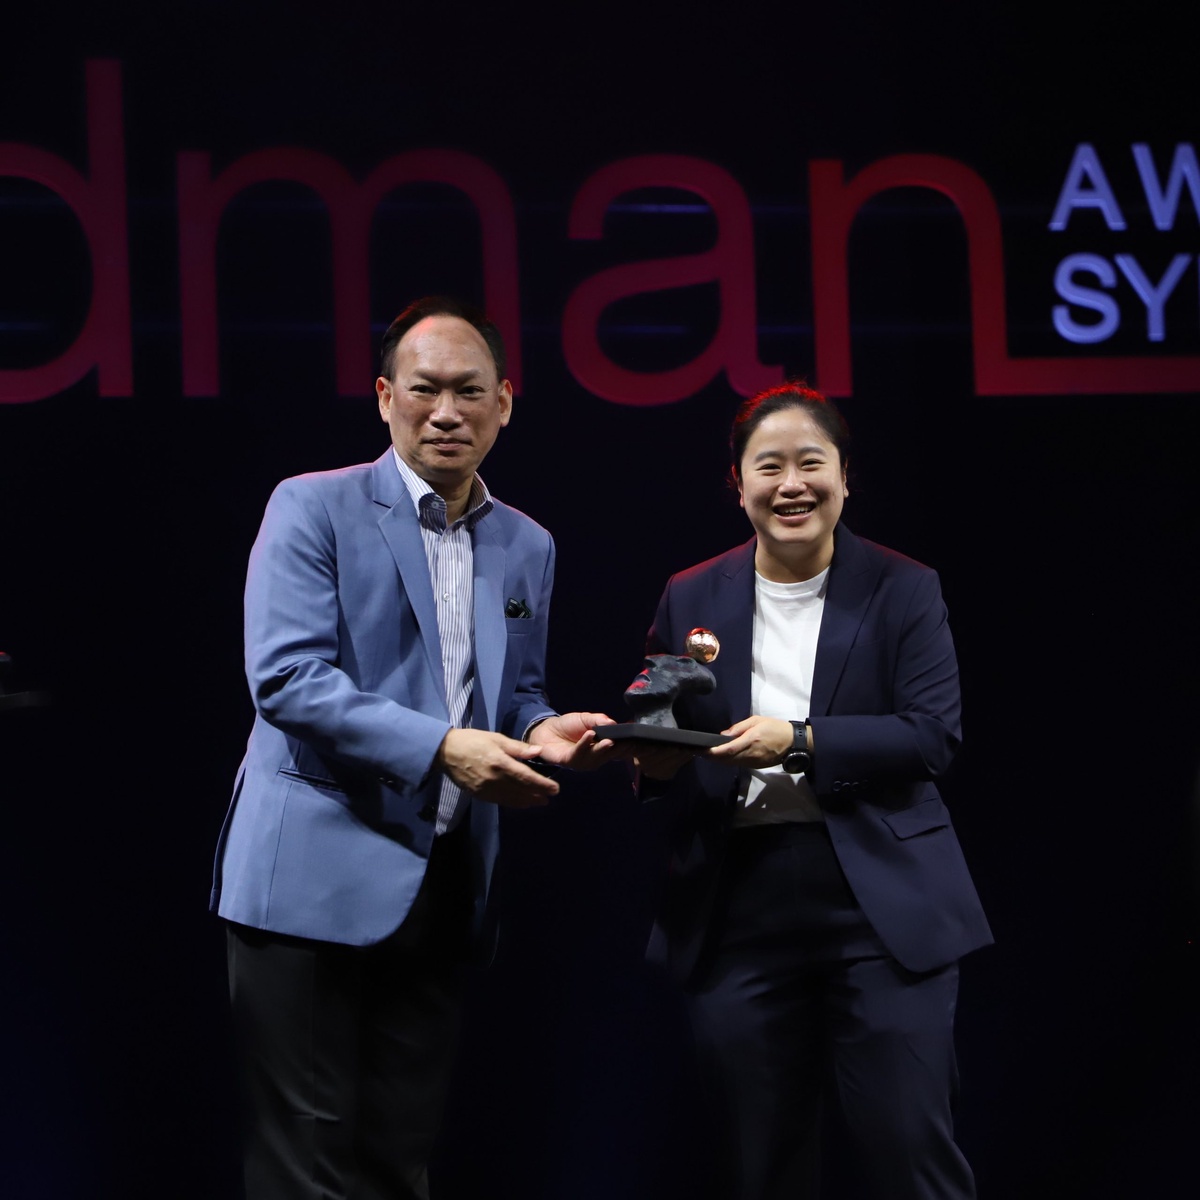 VGI ควงแขน SOUR Bangkok ปลุกกระแสสื่อ DOOH ในไทย พาแคมเปญ Whoscall The Safety Station กวาด 12 รางวัล สื่อโฆษณาสุดครีเอทีพ จากเวที Adman Awards Symposium 2022